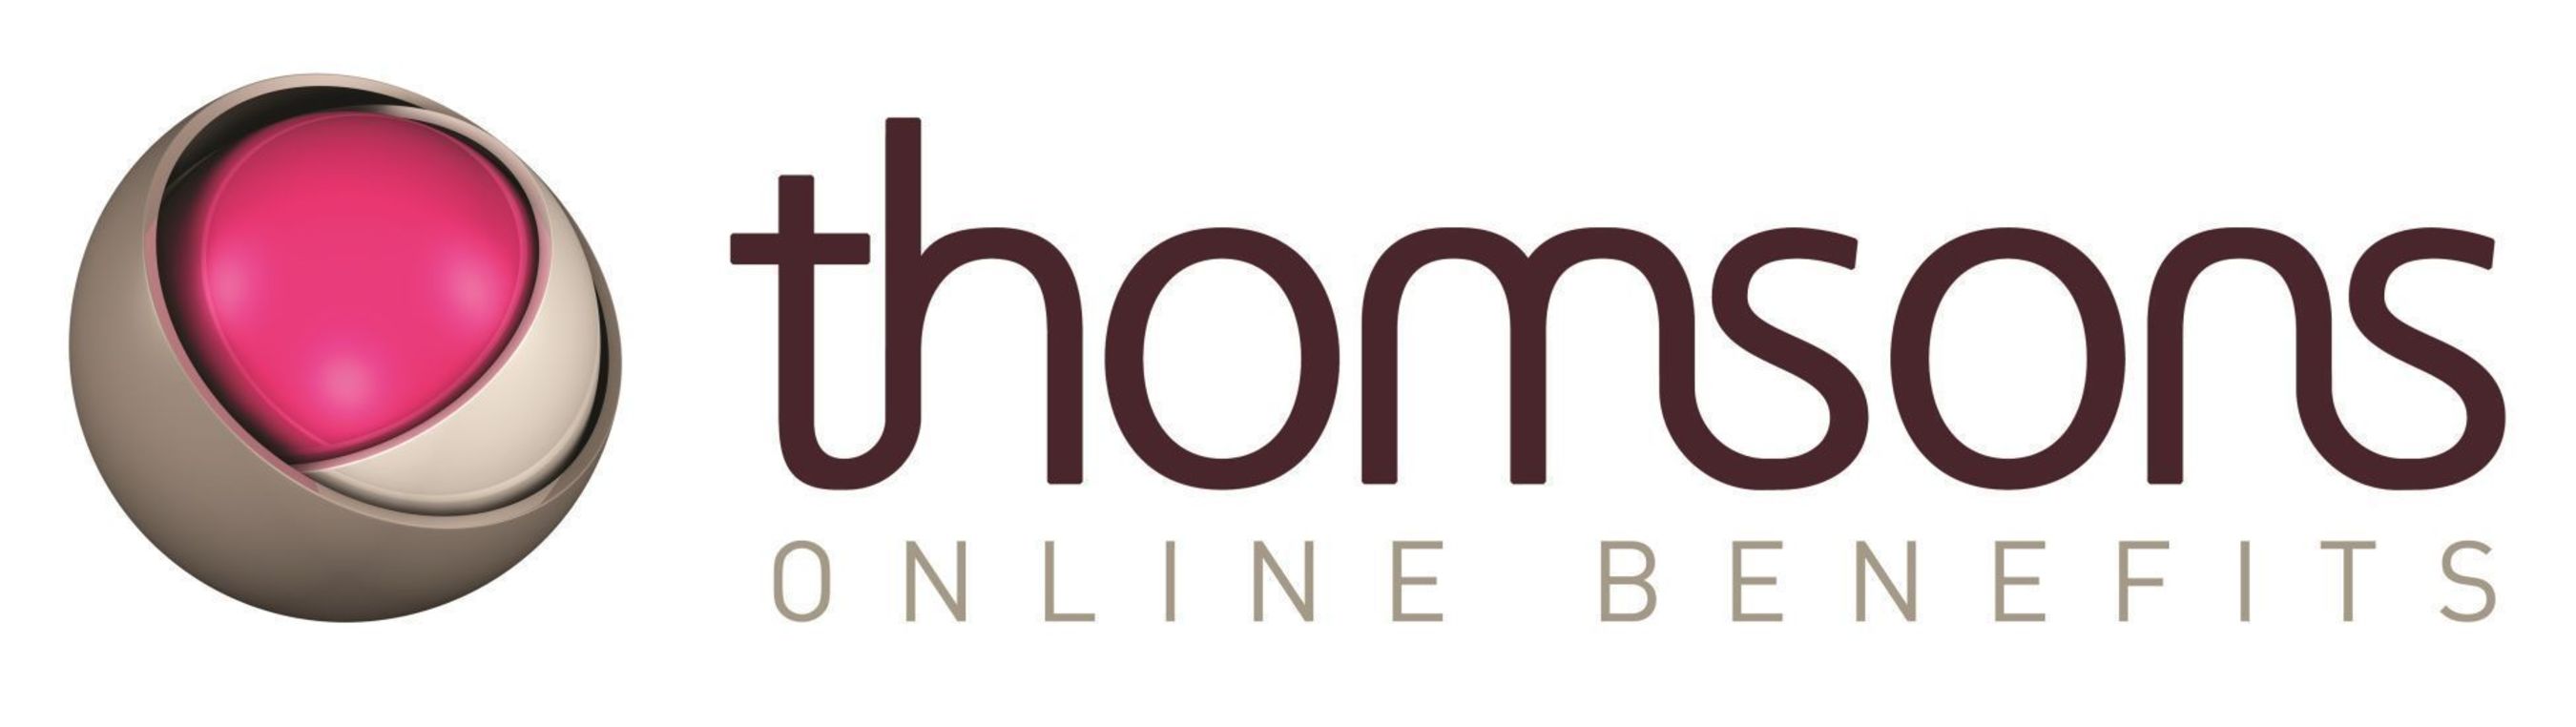 Thomsons Online Benefits logo (PRNewsFoto/Thomsons Online Benefits)